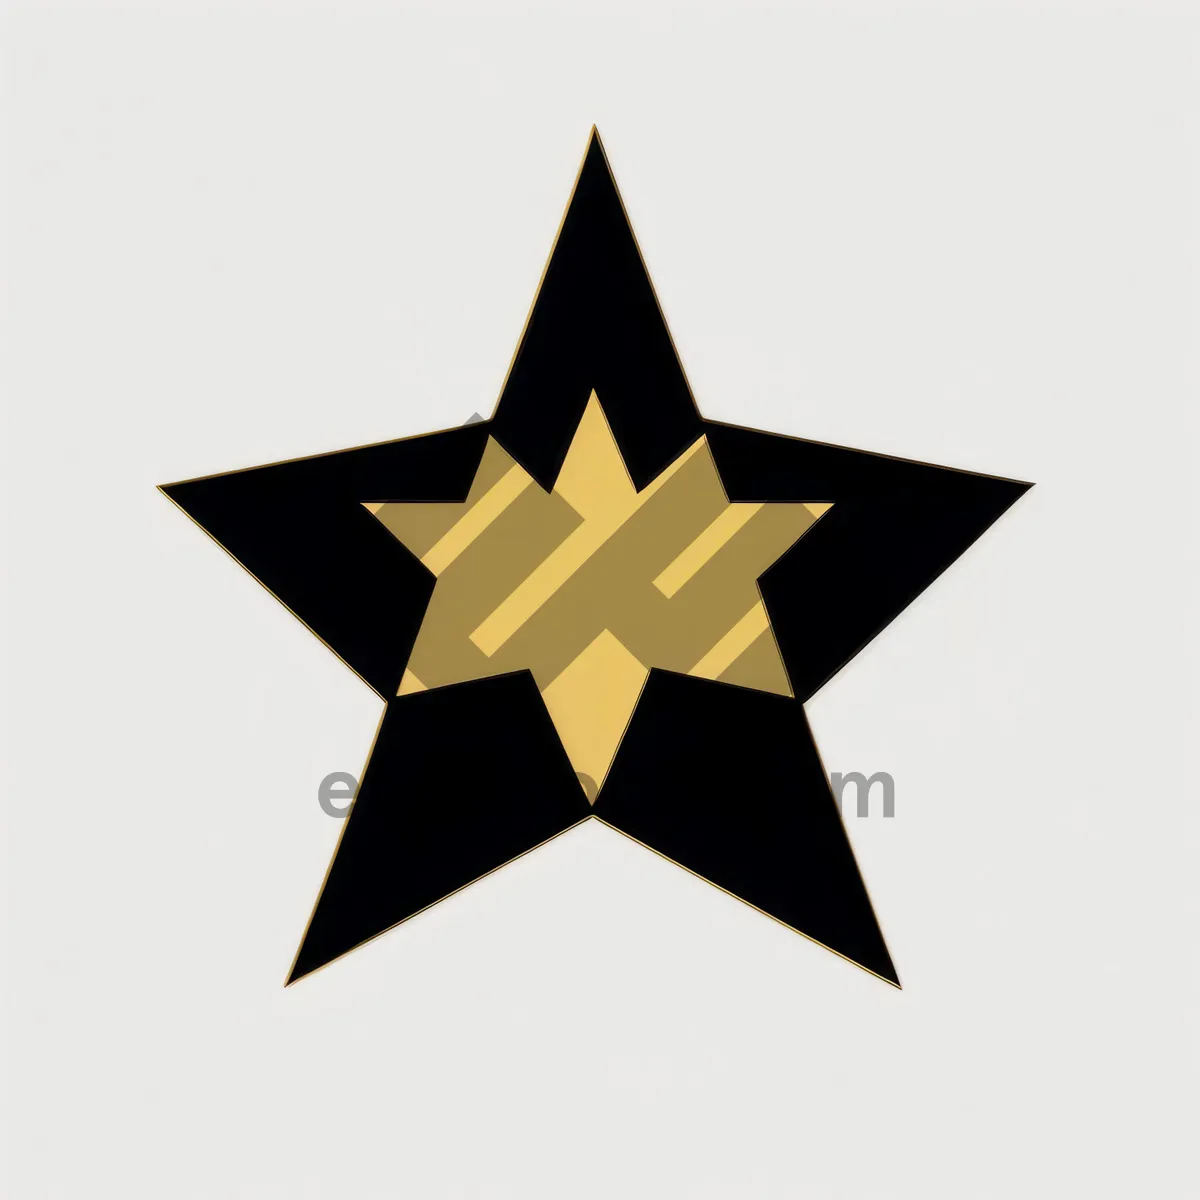 Picture of Symbolic Star Heraldry Design - Graphic Decoration Icon